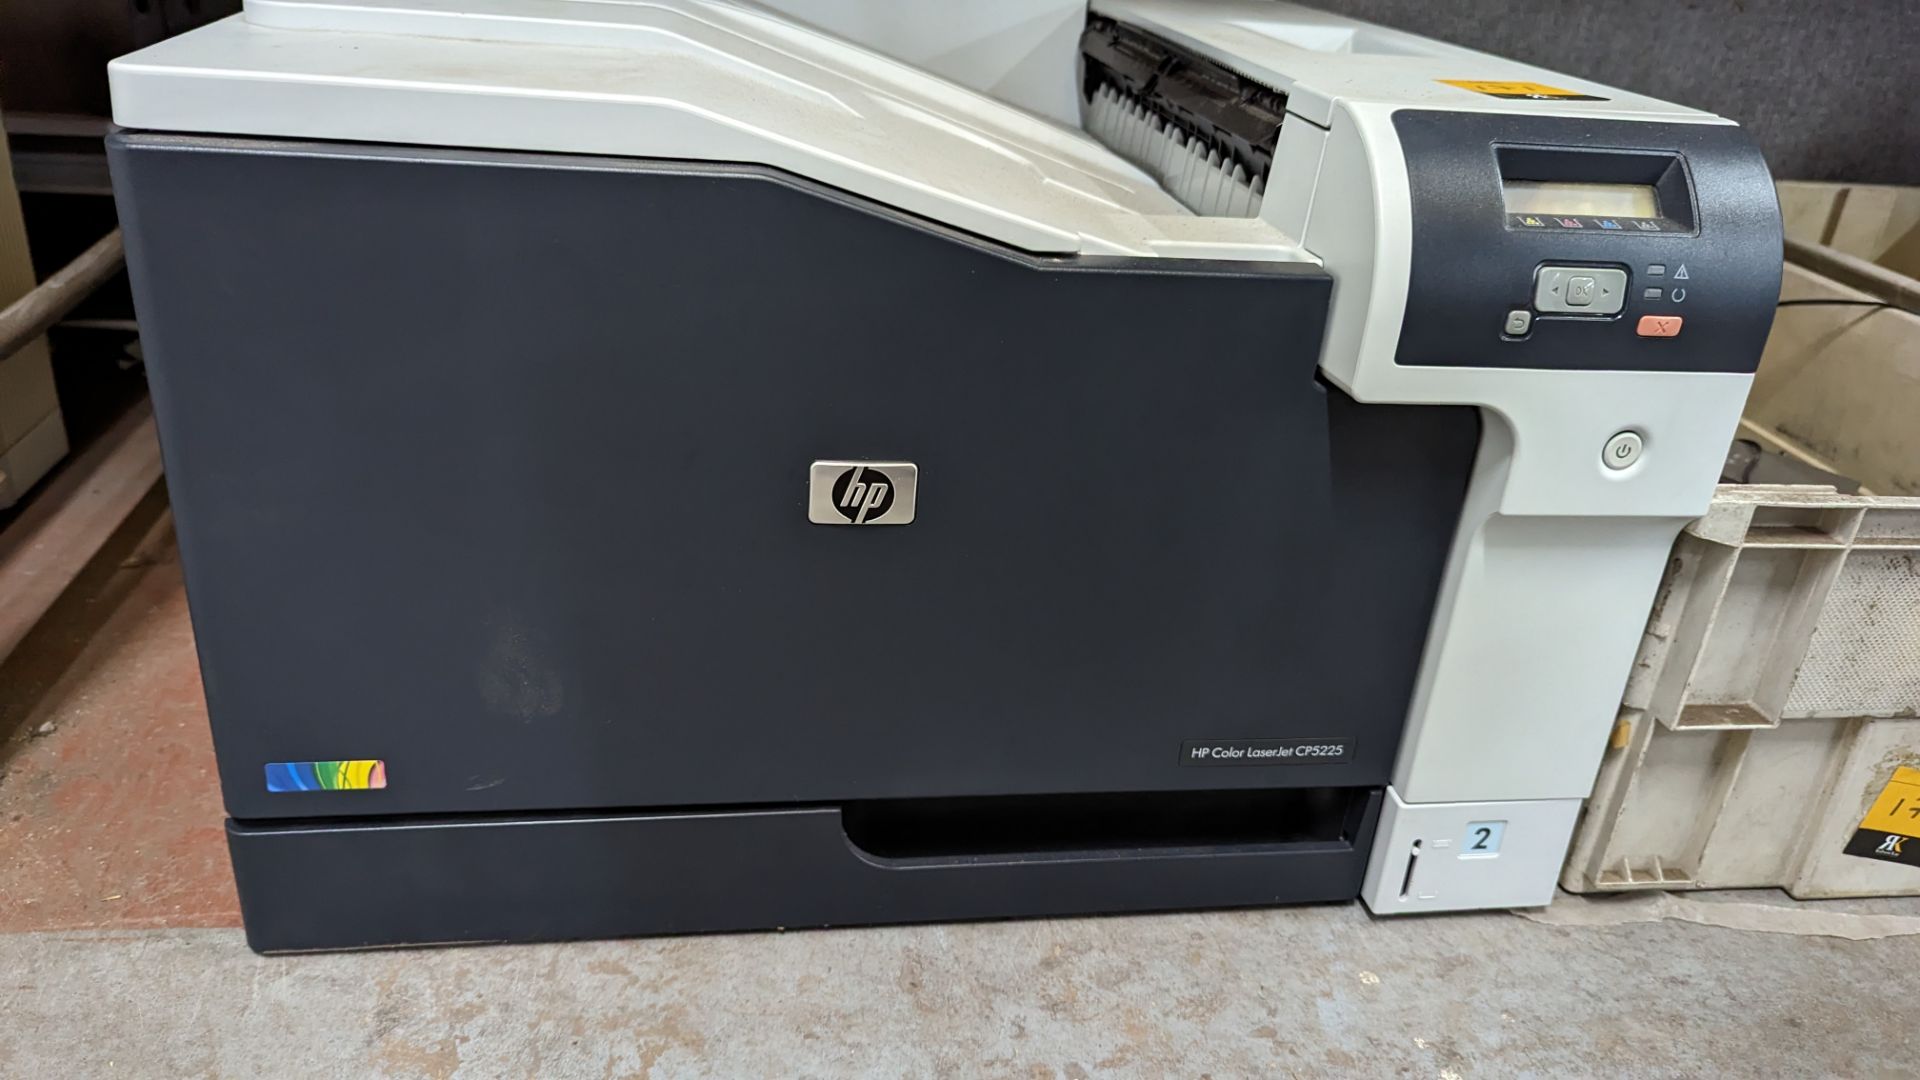 HP colour LaserJet printer model CP5225 - Image 4 of 6